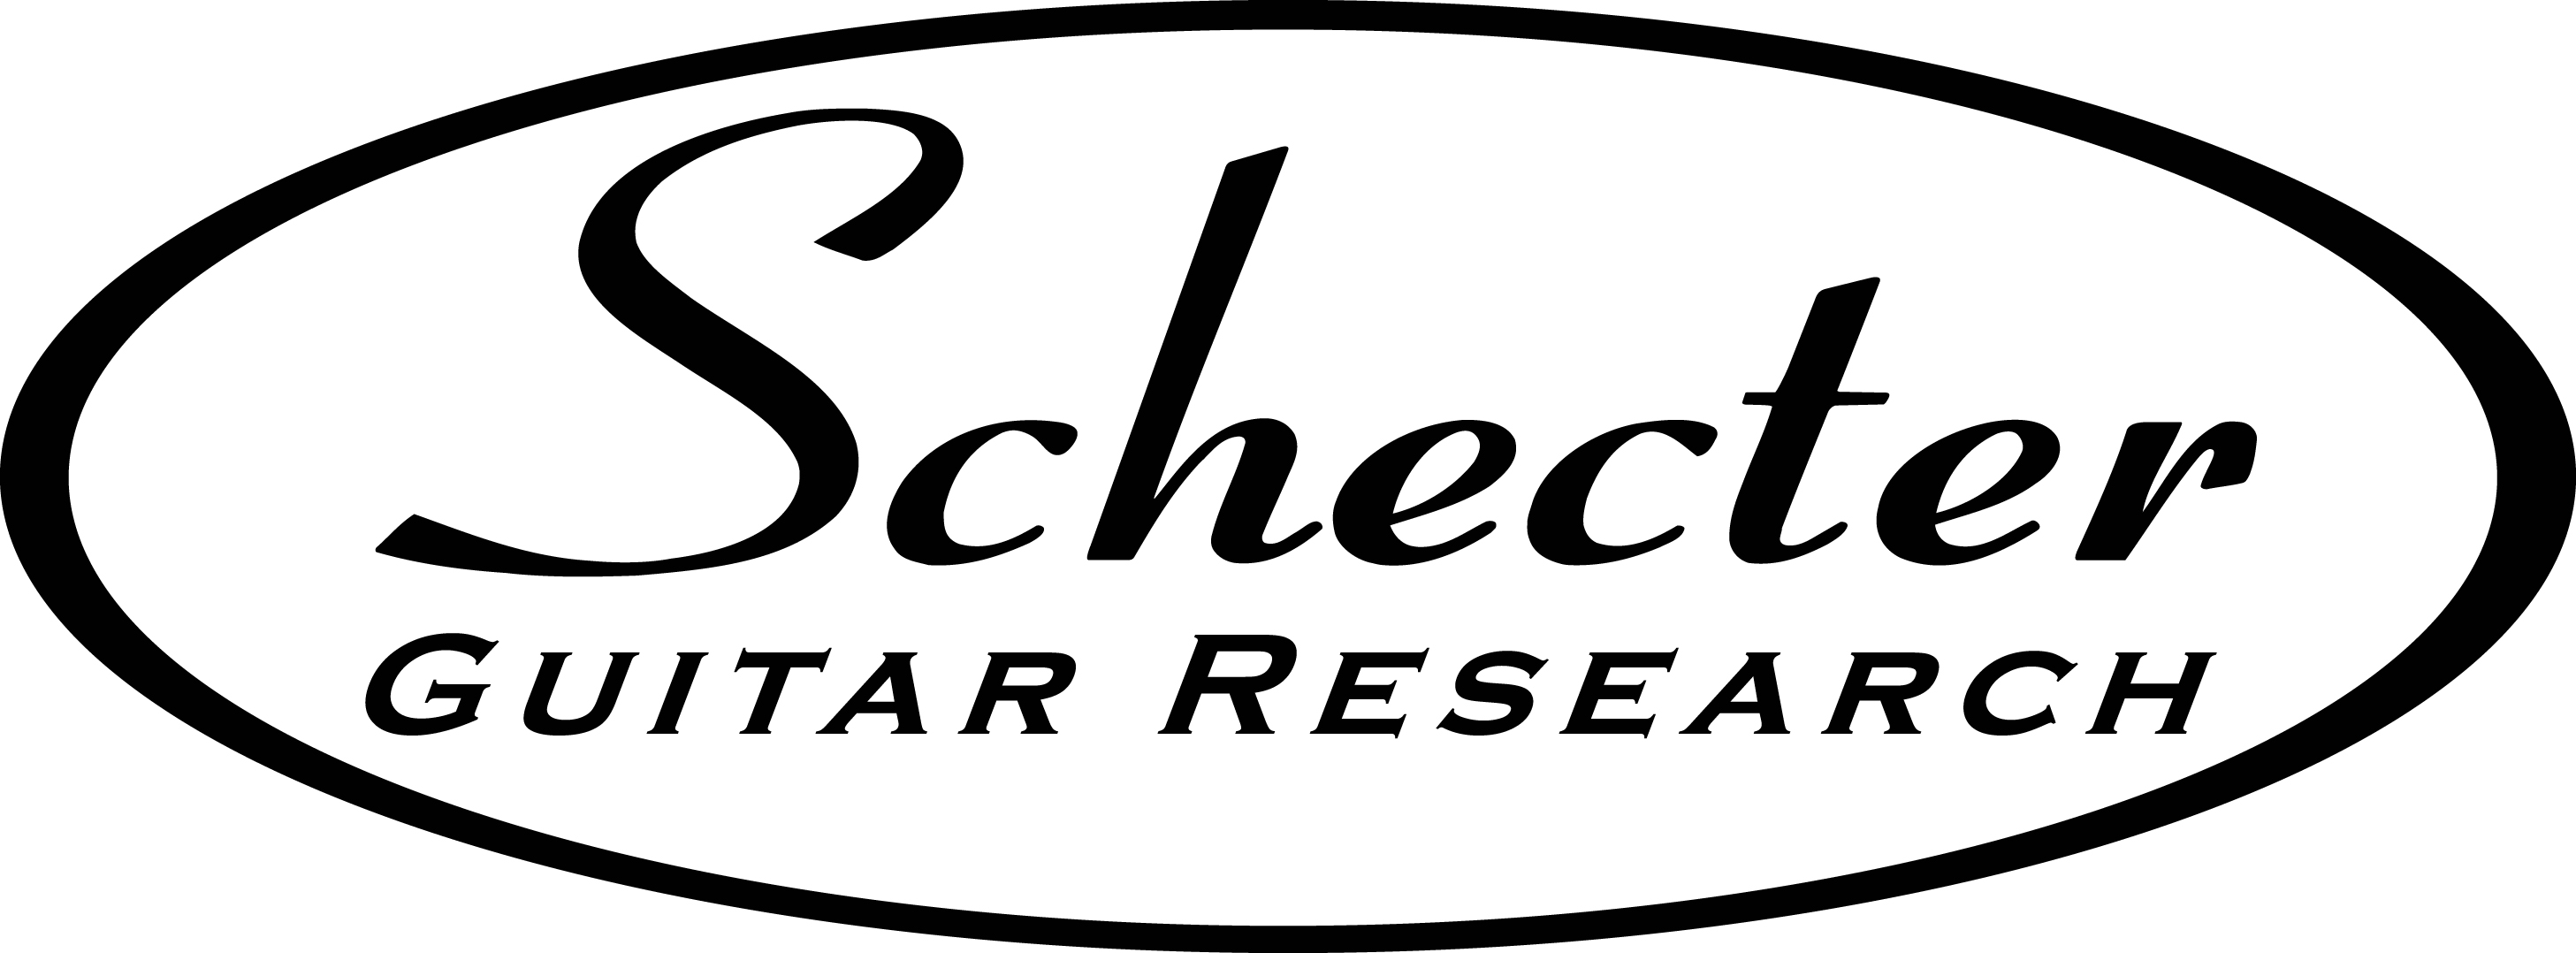 Guitar Schecter - V1